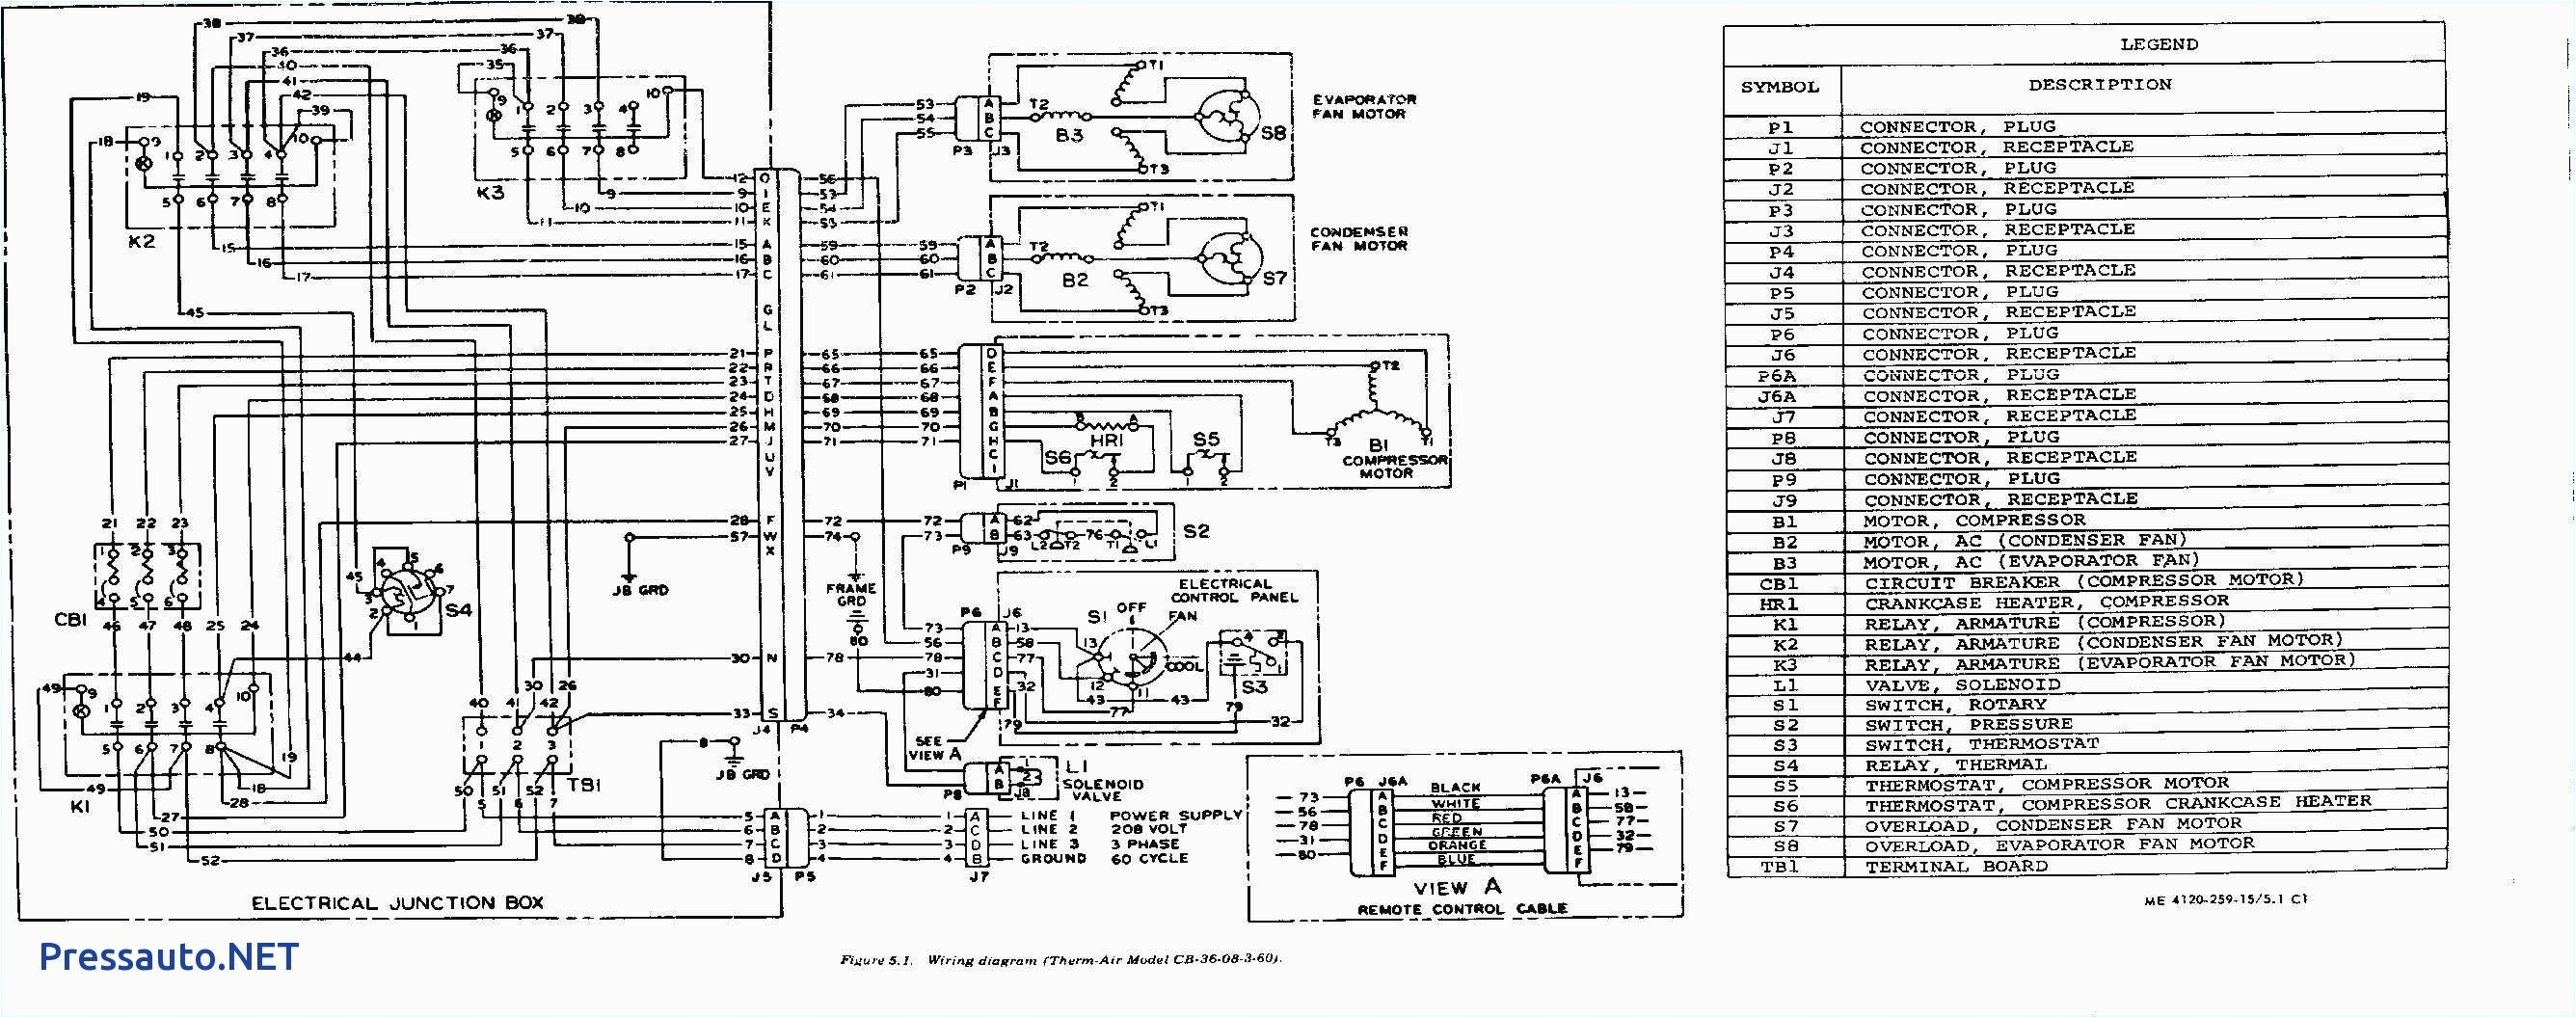 trane hvac wiring diagrams wiring diagram page air conditioner likewise trane heat pump furnace thermostat wiring